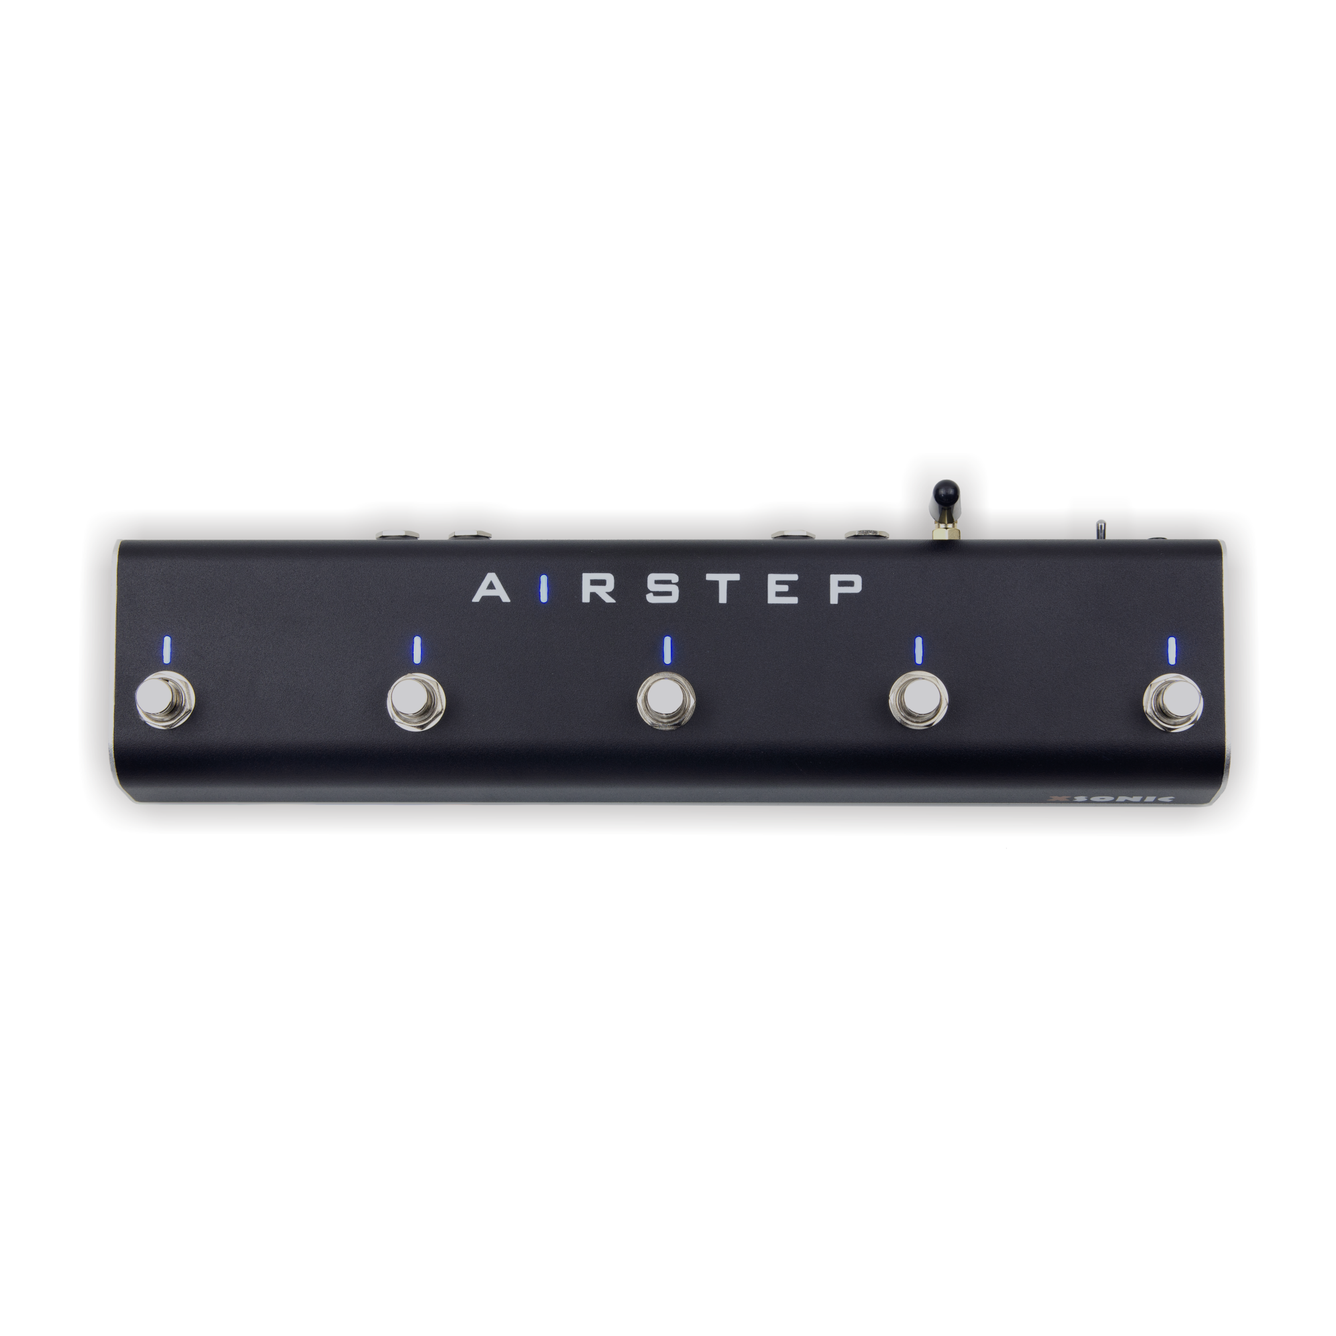 [B-Stock] AIRSTEP | Smart Multi Controller